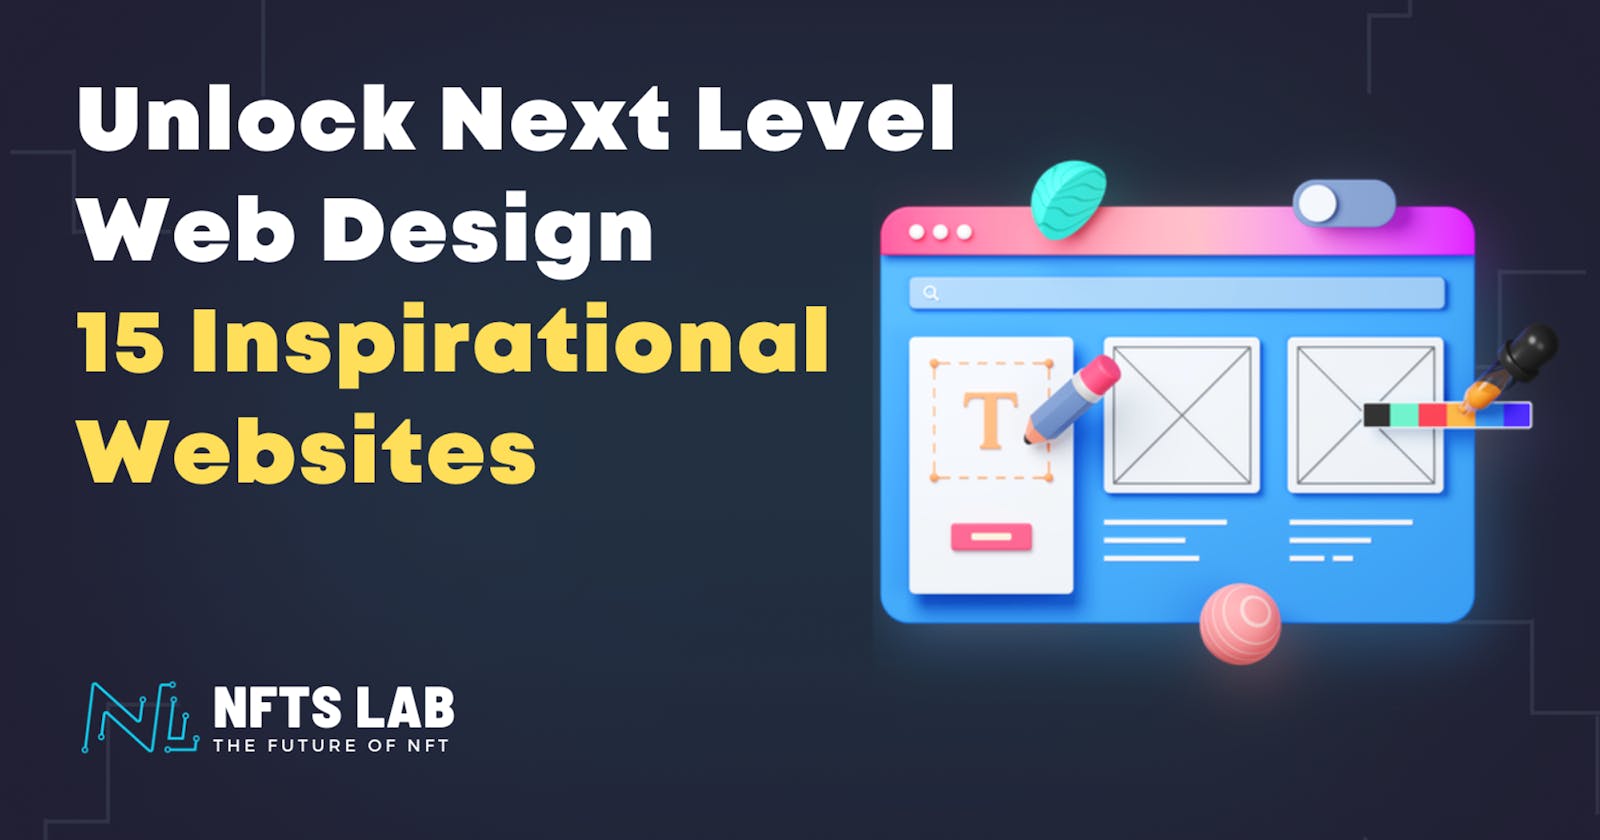 Unlock Next Level Web Design: 15 Inspirational Websites!